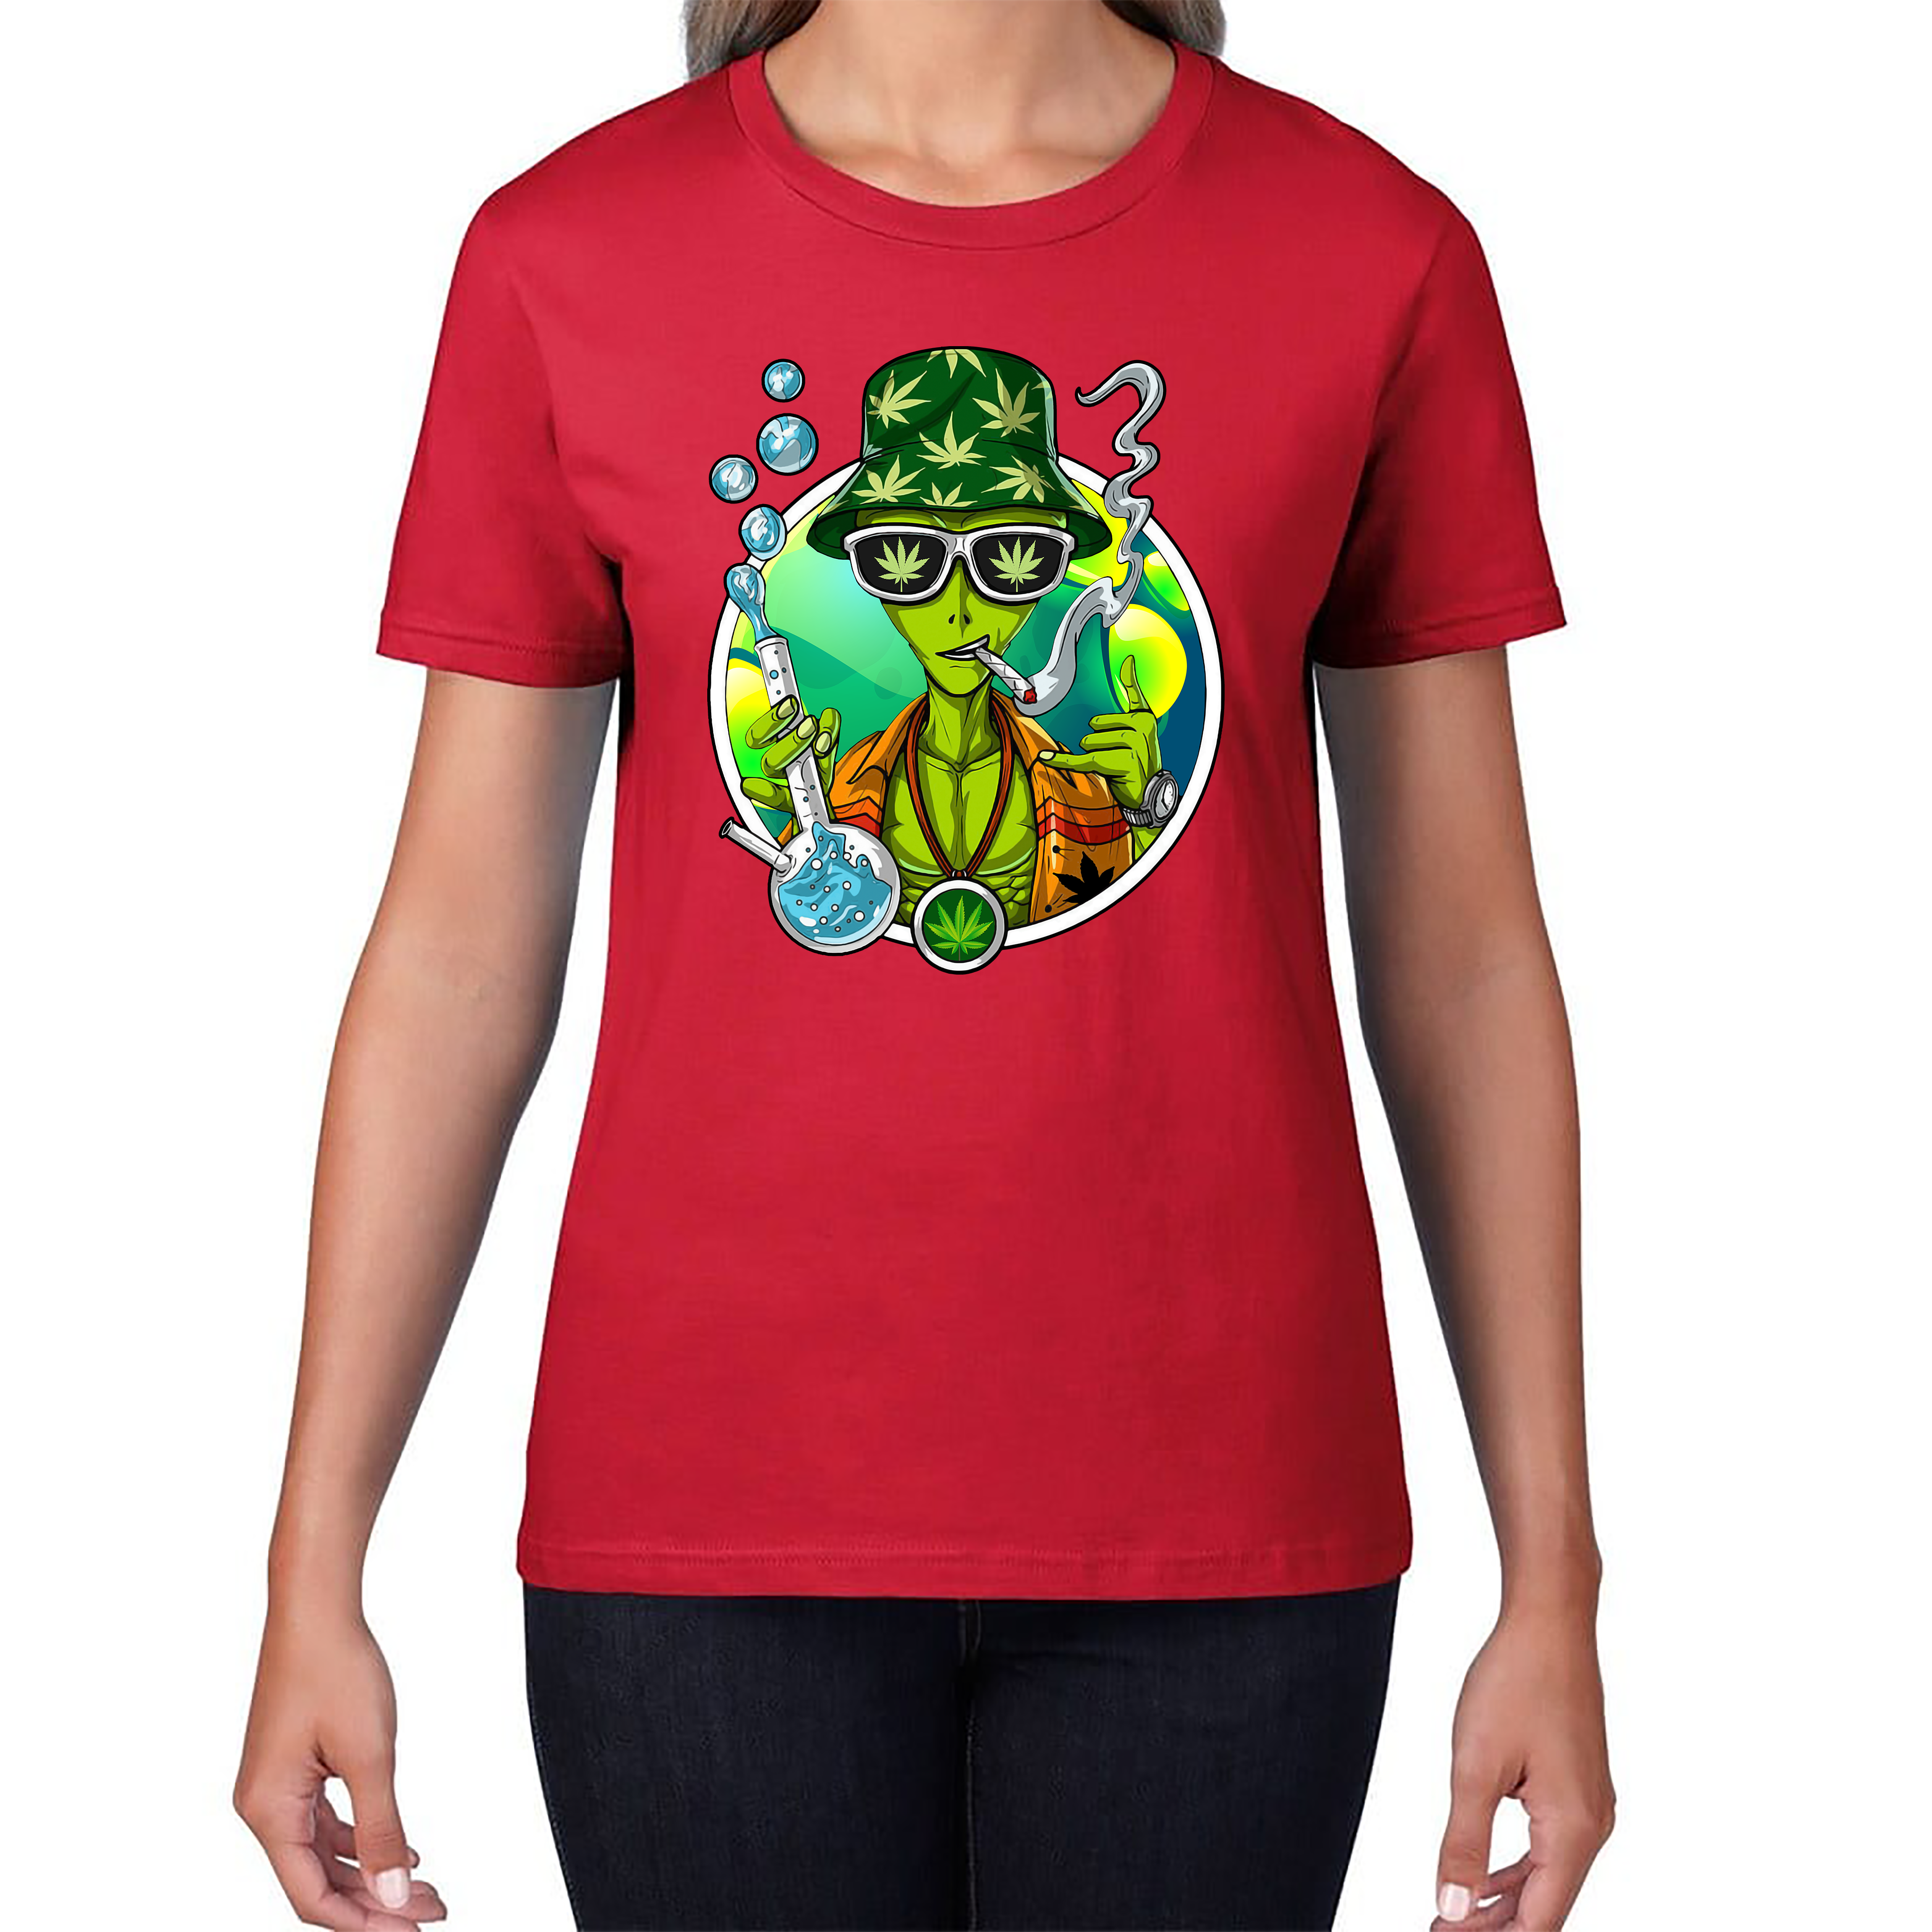 Weed Alien Stoner T-shirt Marijuana, Cannabis Lovers Funny Joke Womens Tee Top